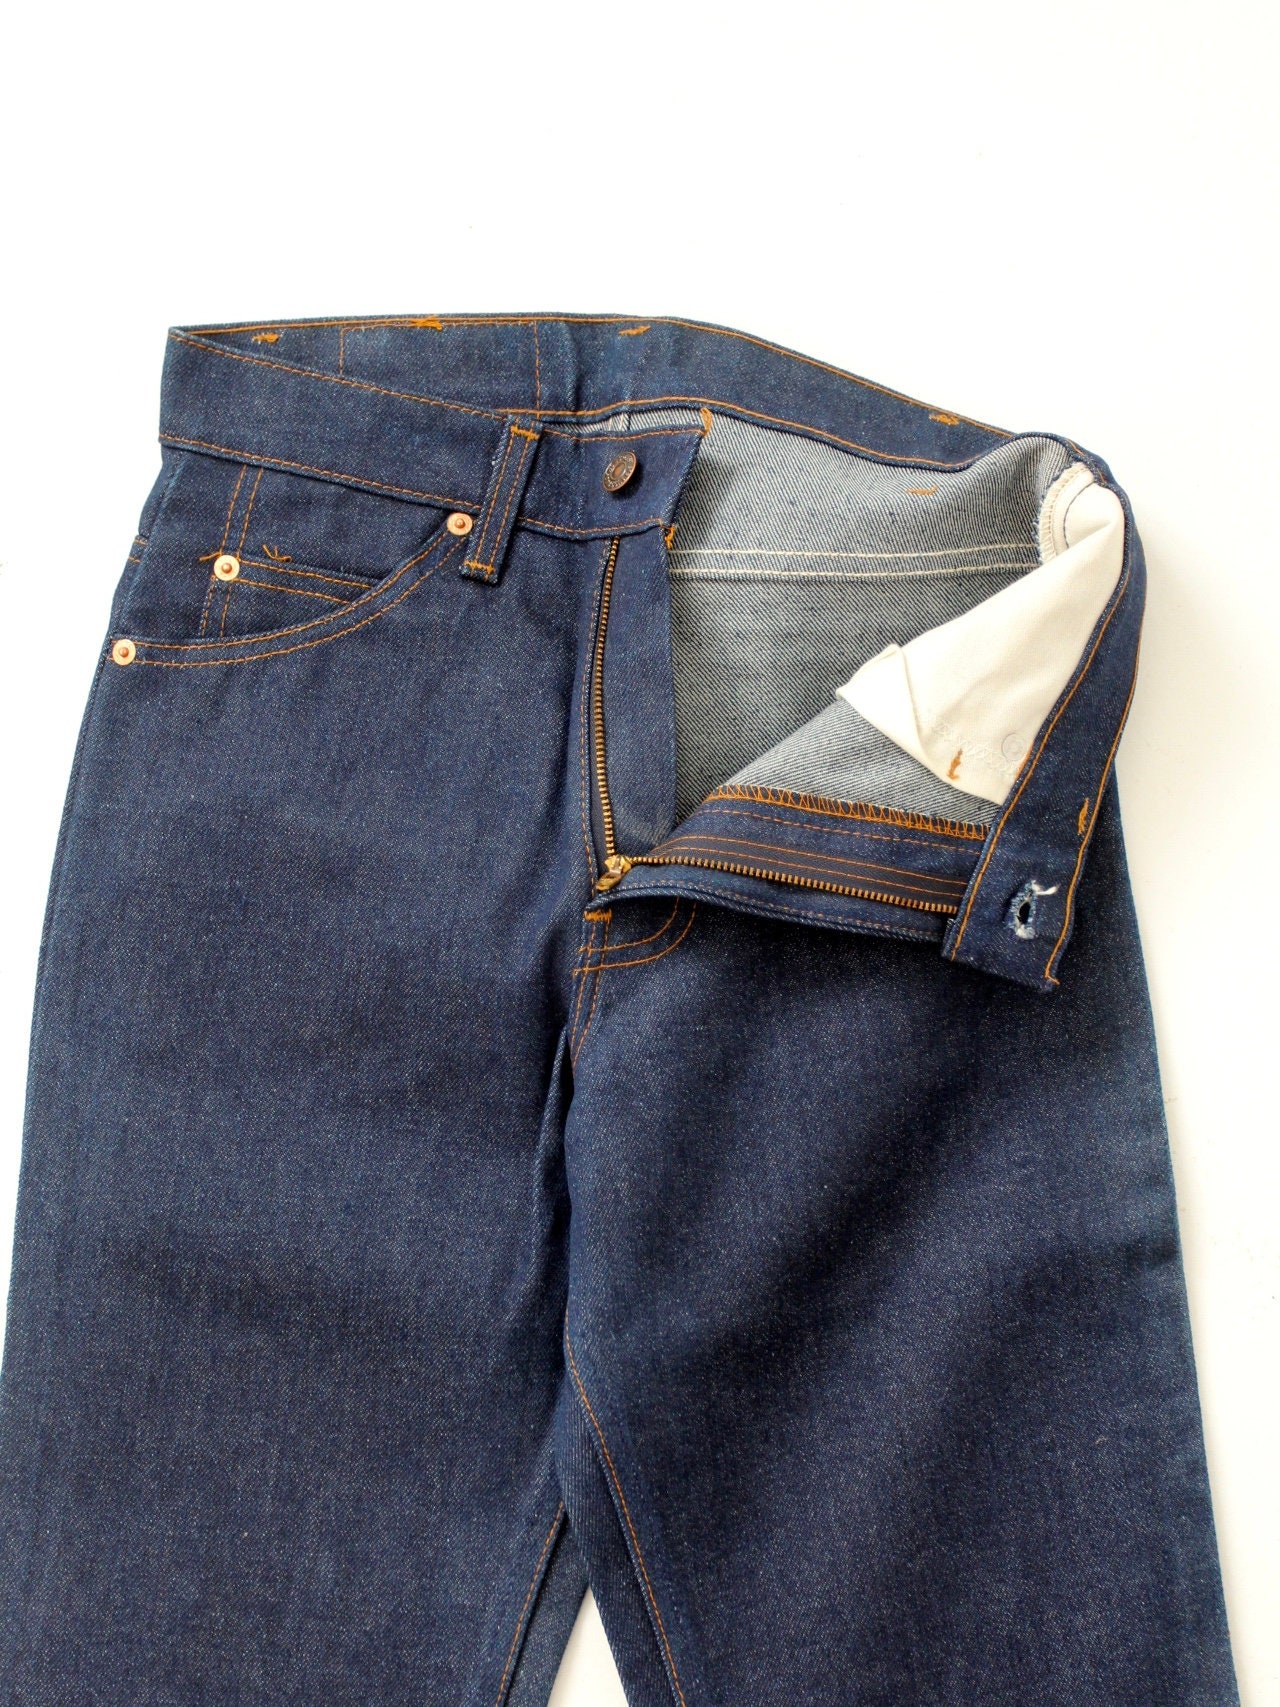 Vintage 70s Levis Jeans, Orange Tab Dark Wash Denim Jeans, 28 X 33 - Etsy